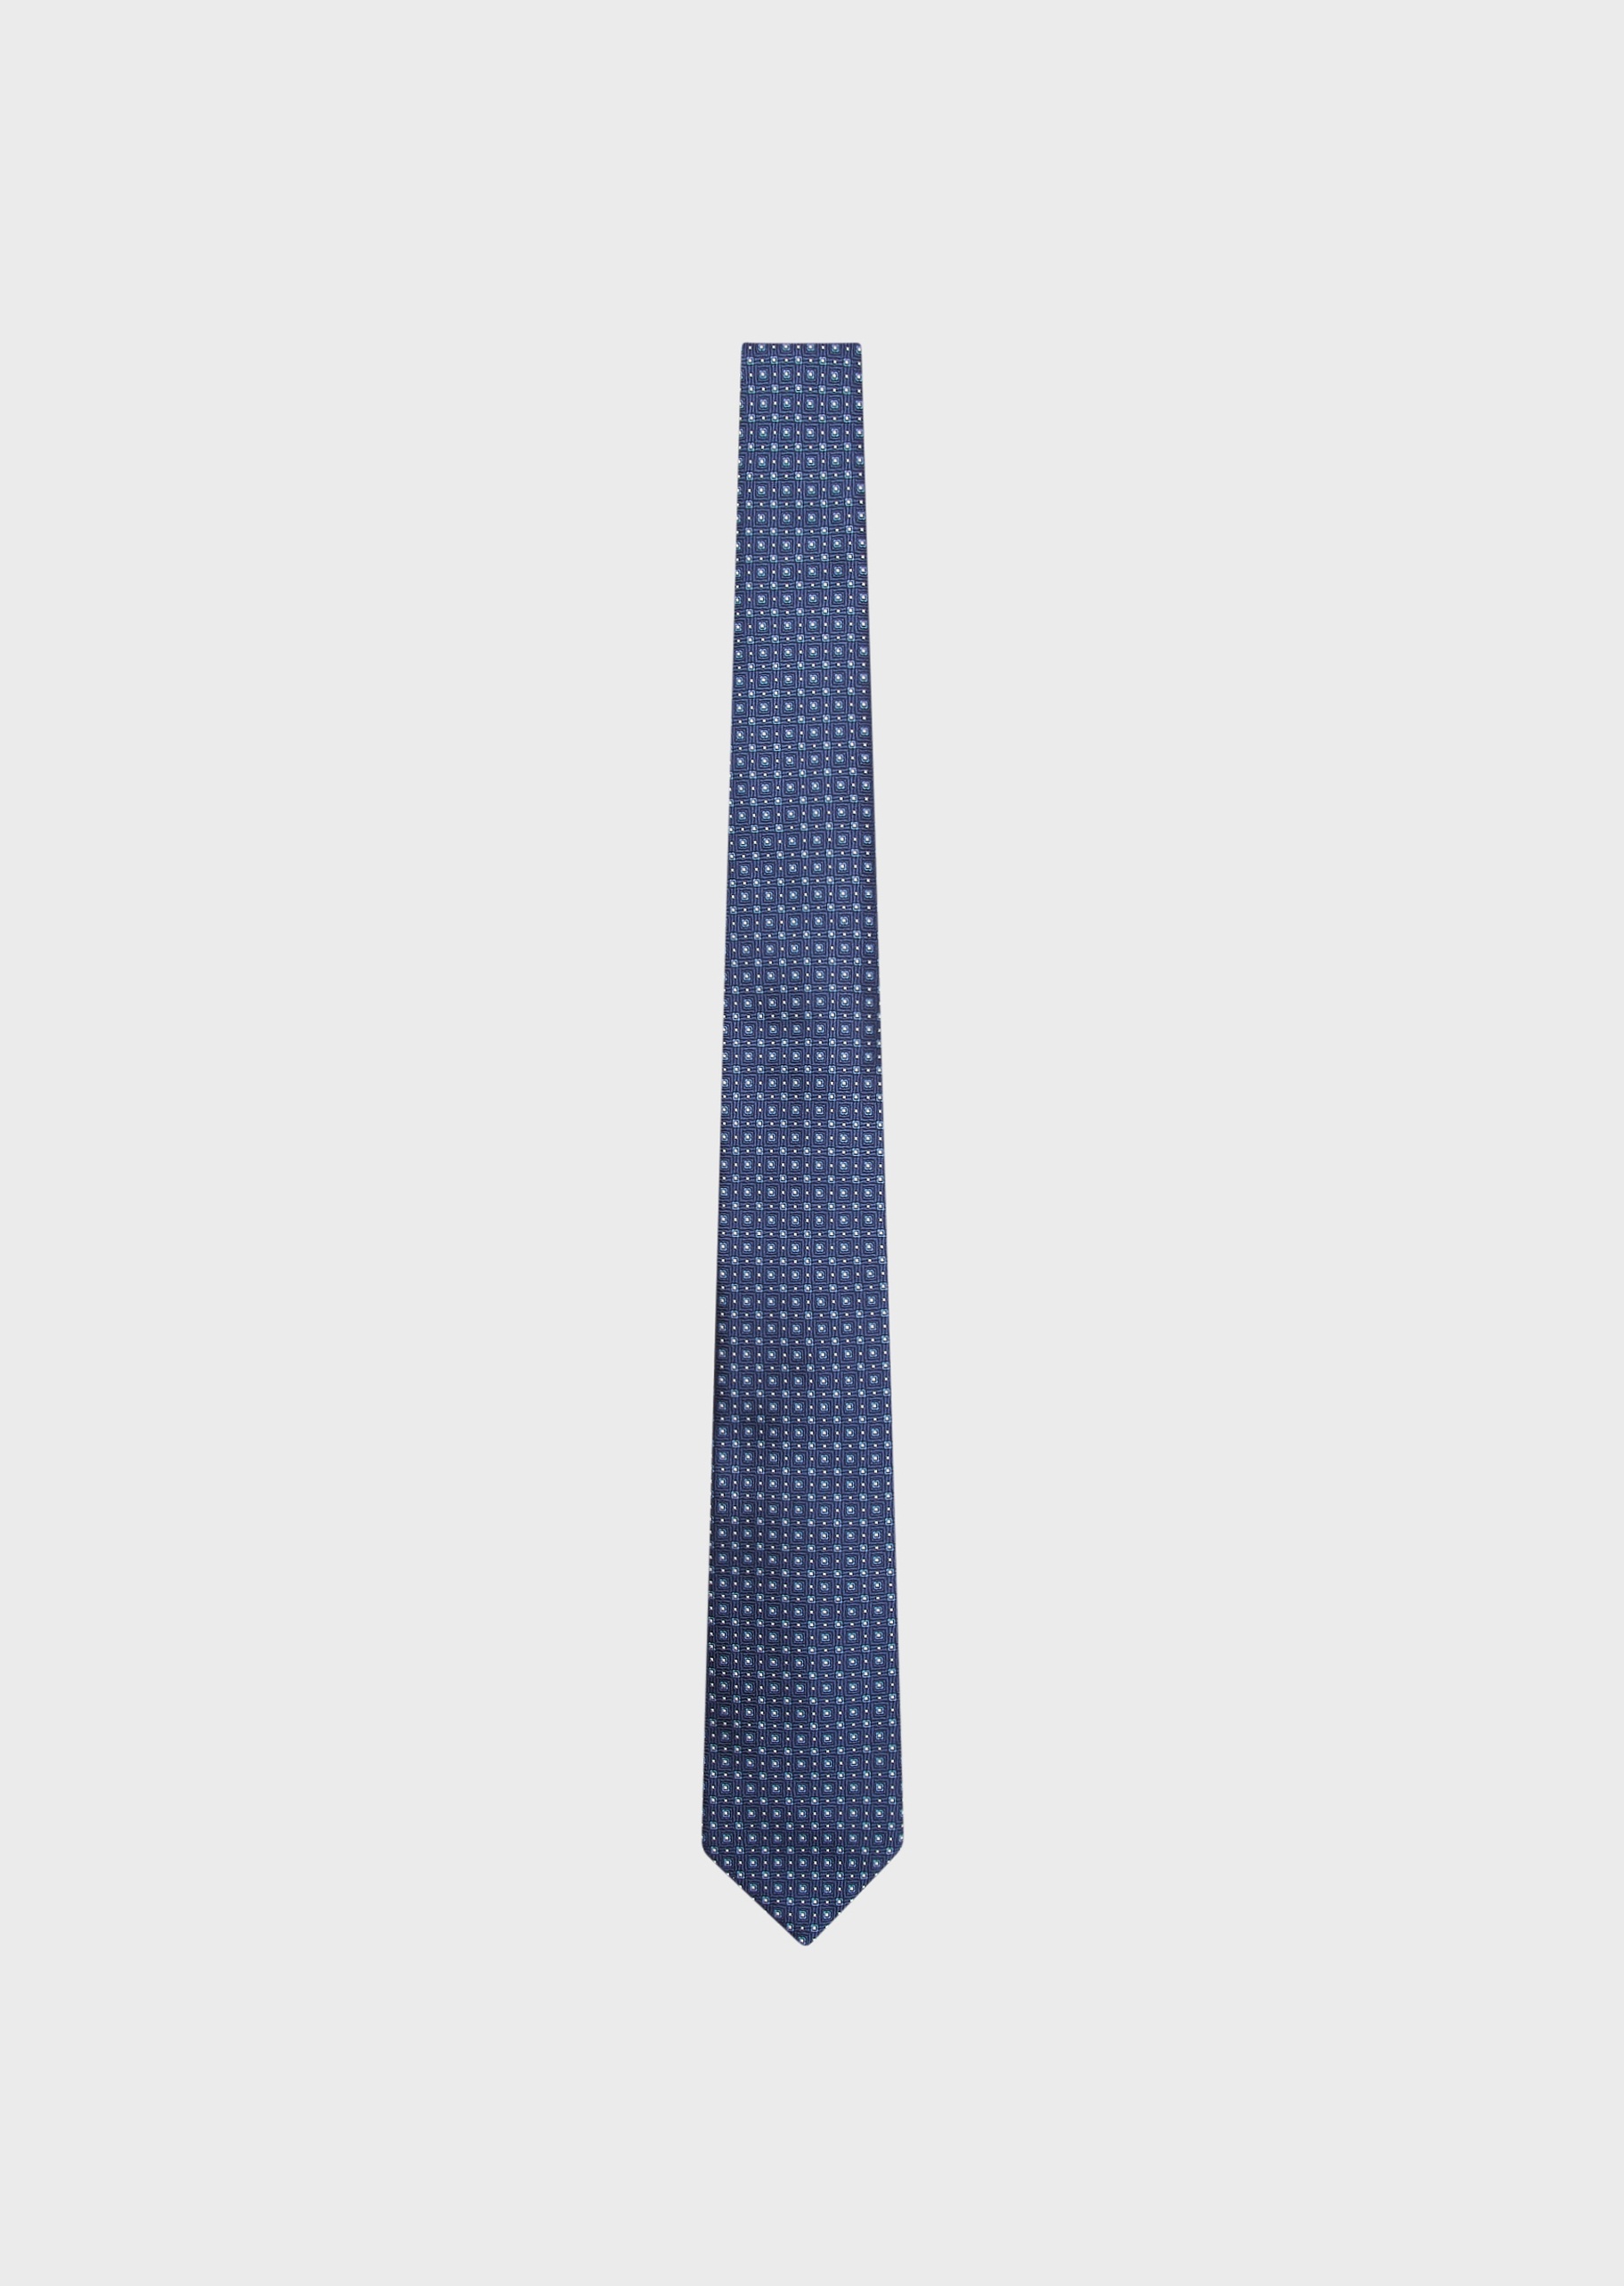 Giorgio Armani 男士休闲箭头型桑蚕丝通体方形提花领带